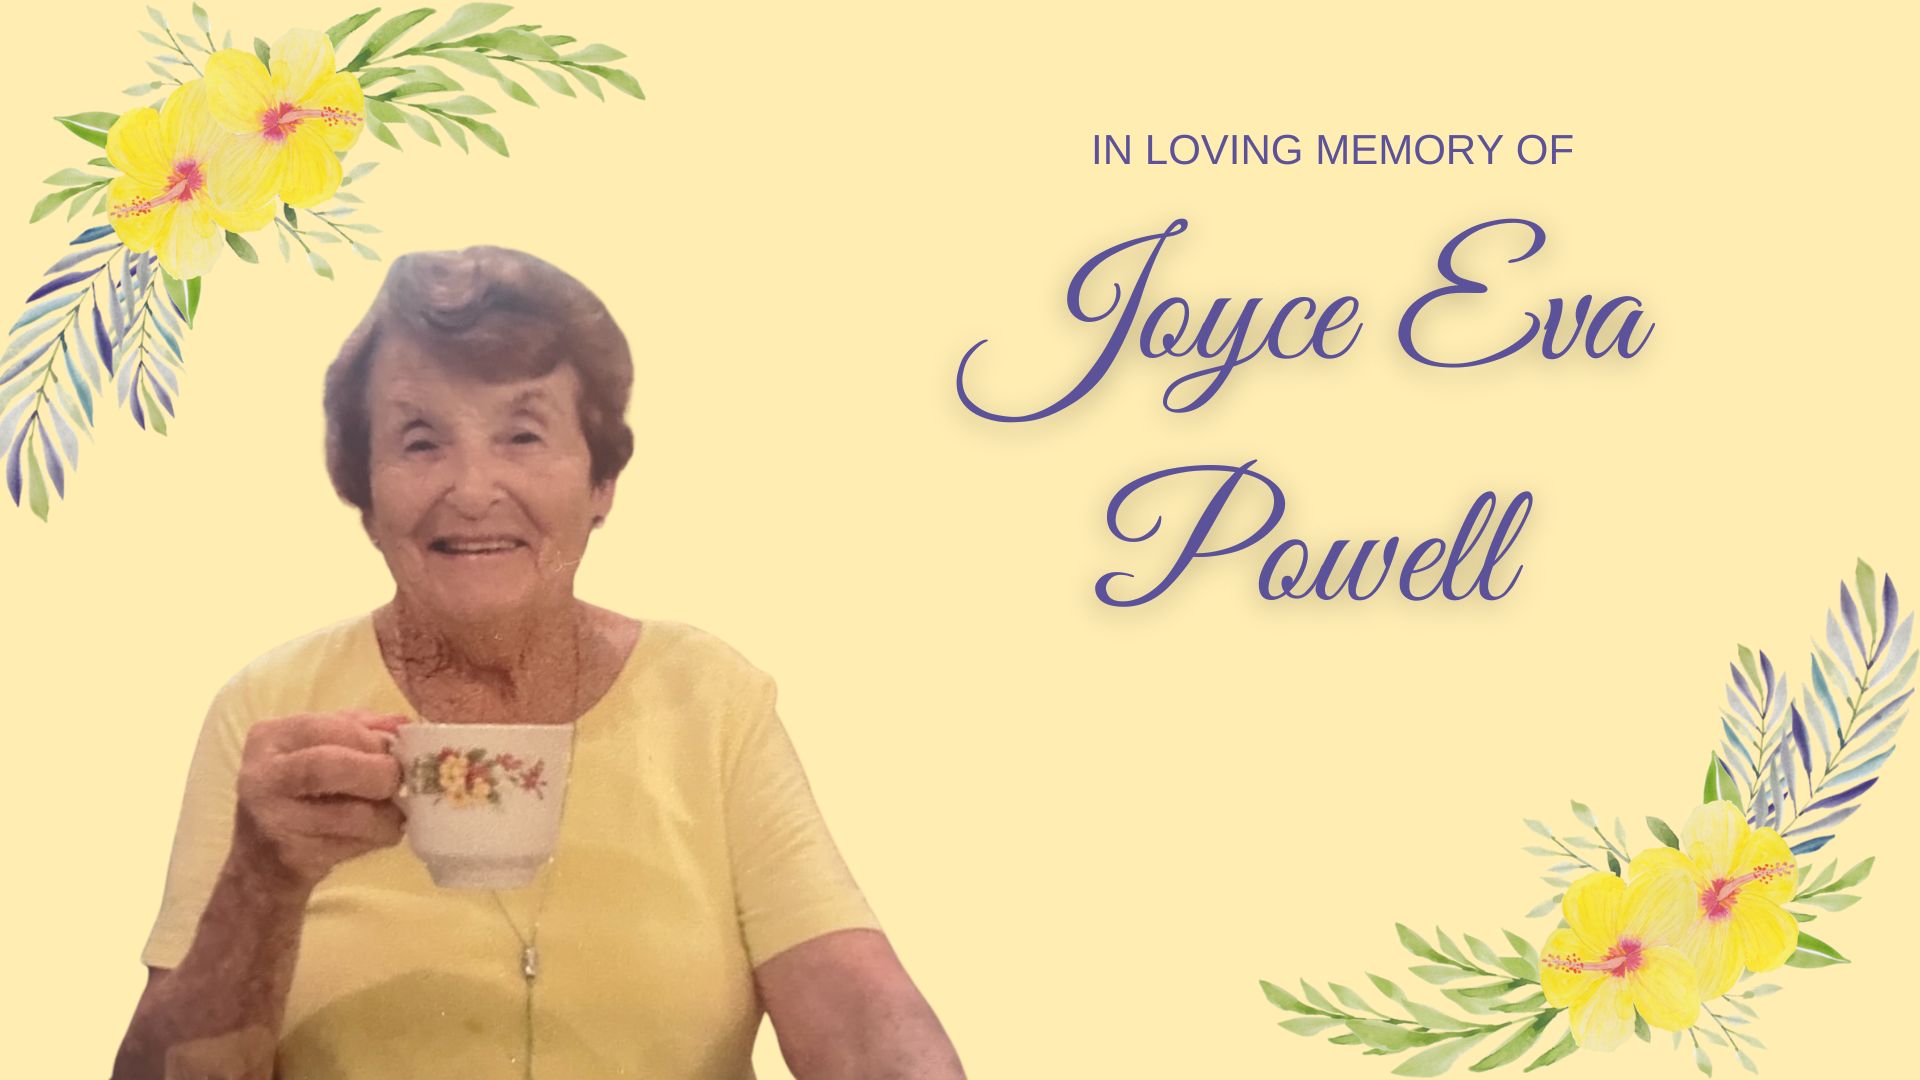 Joyce Eva Powell